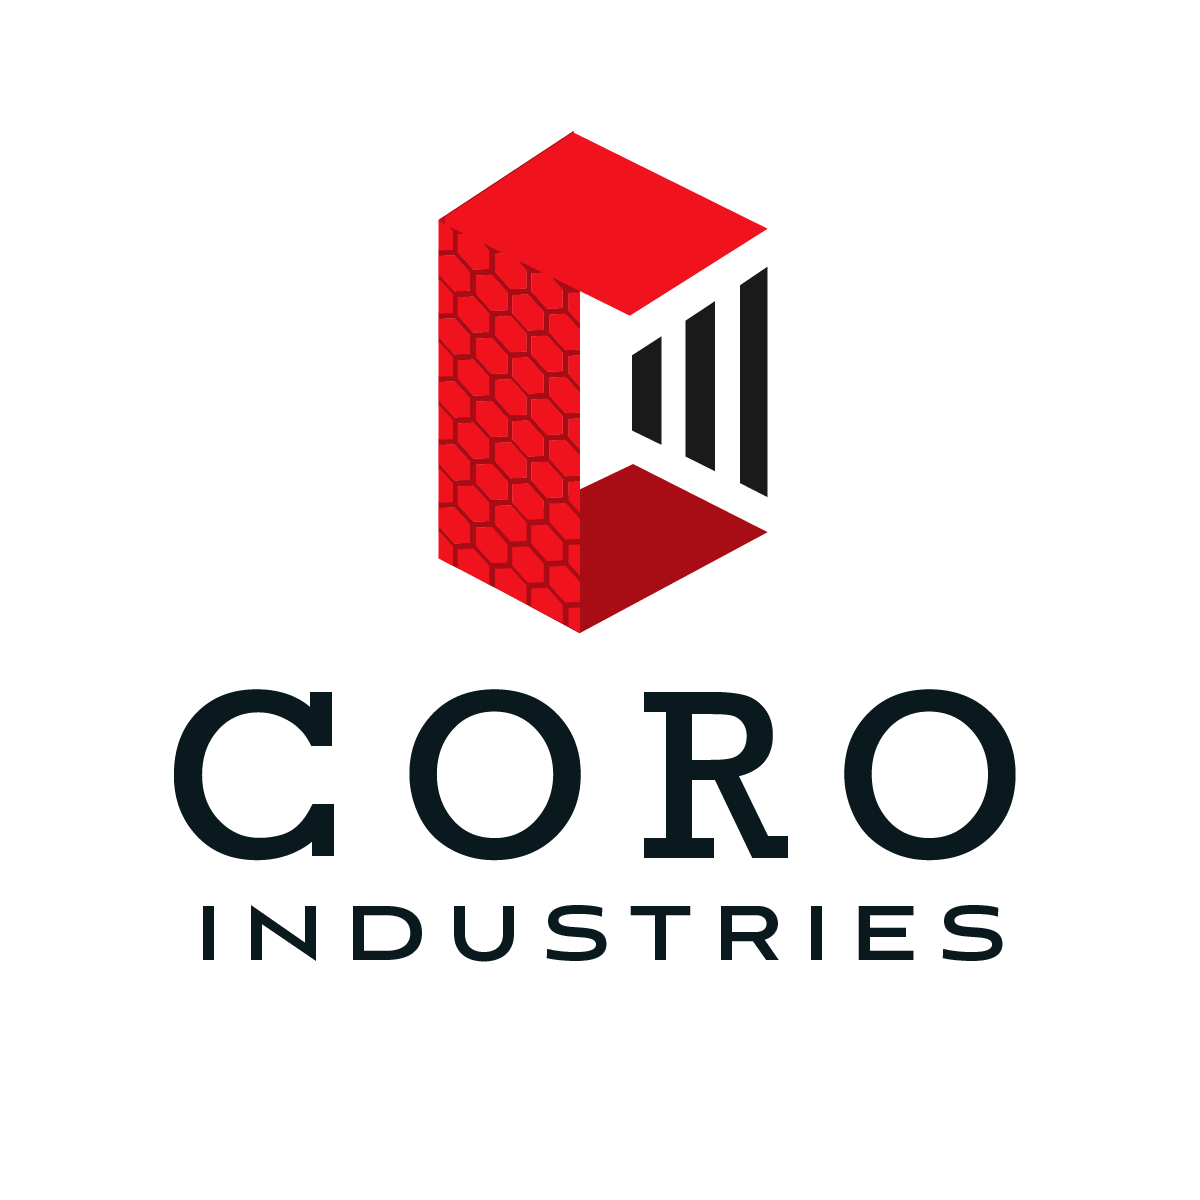 coro industries print shop supplies distributor